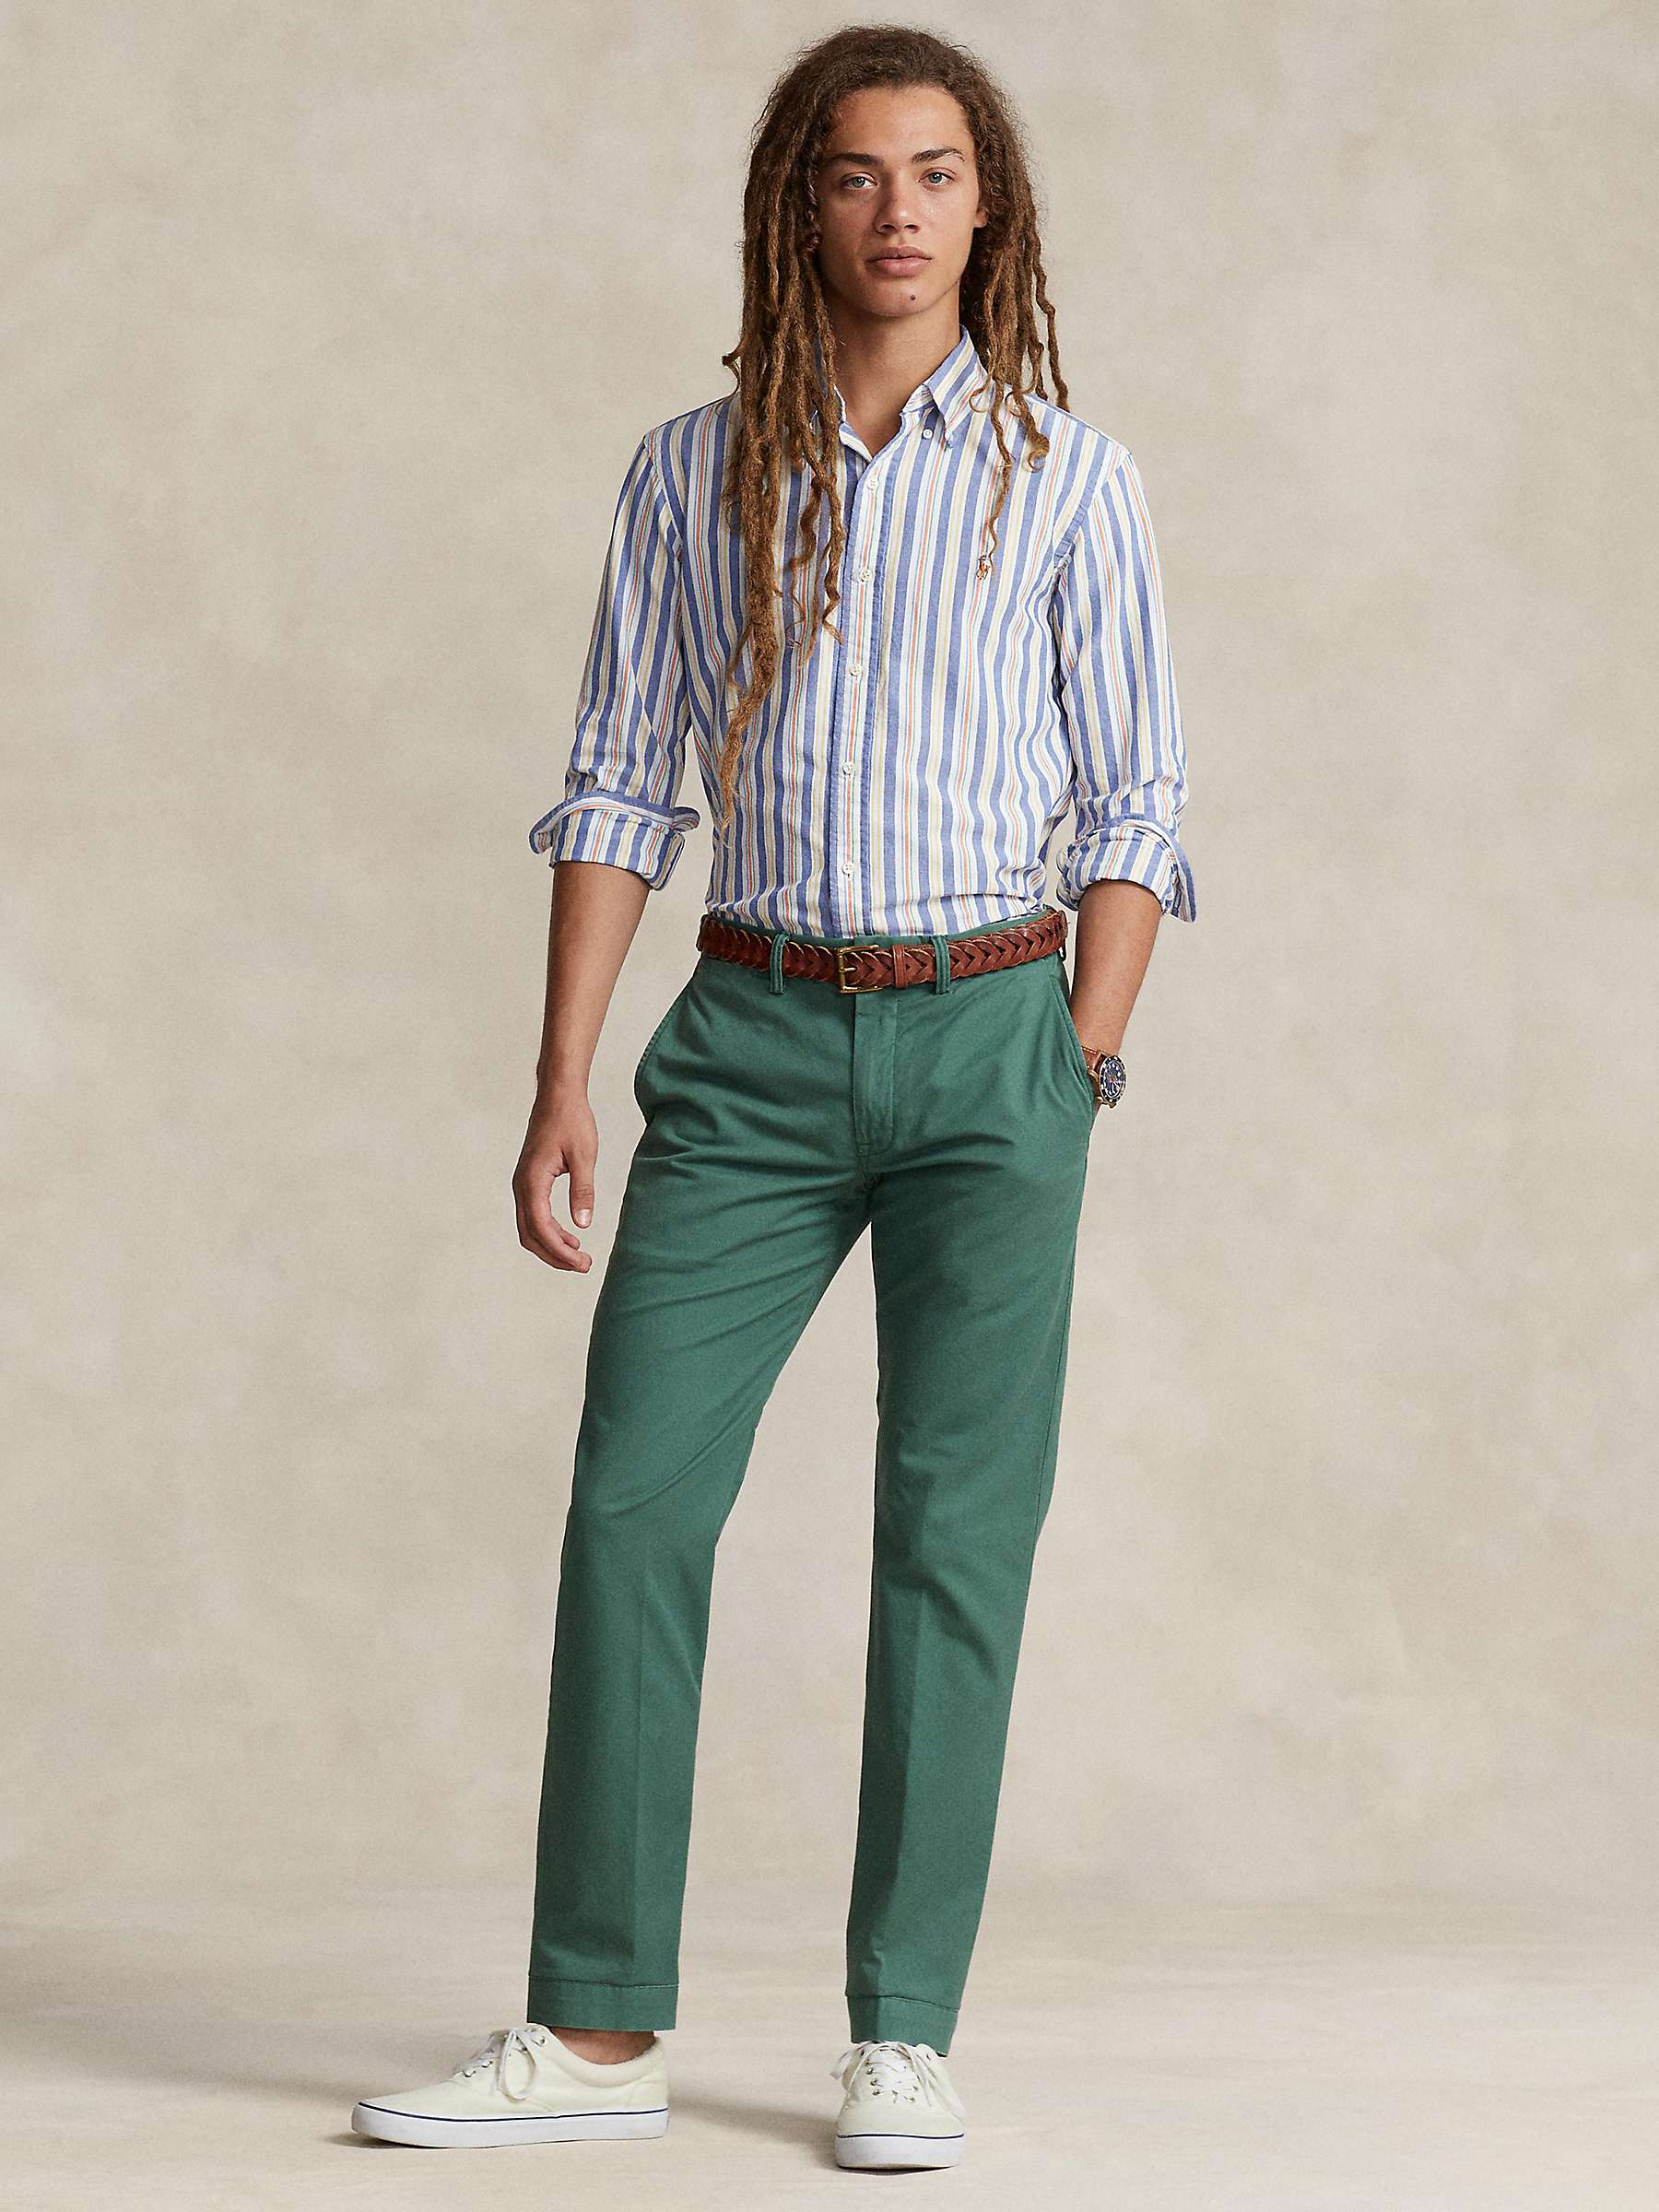 Buy Polo Ralph Lauren Custom Fit Stripe Oxford Shirt, Blue/Multi Online at johnlewis.com